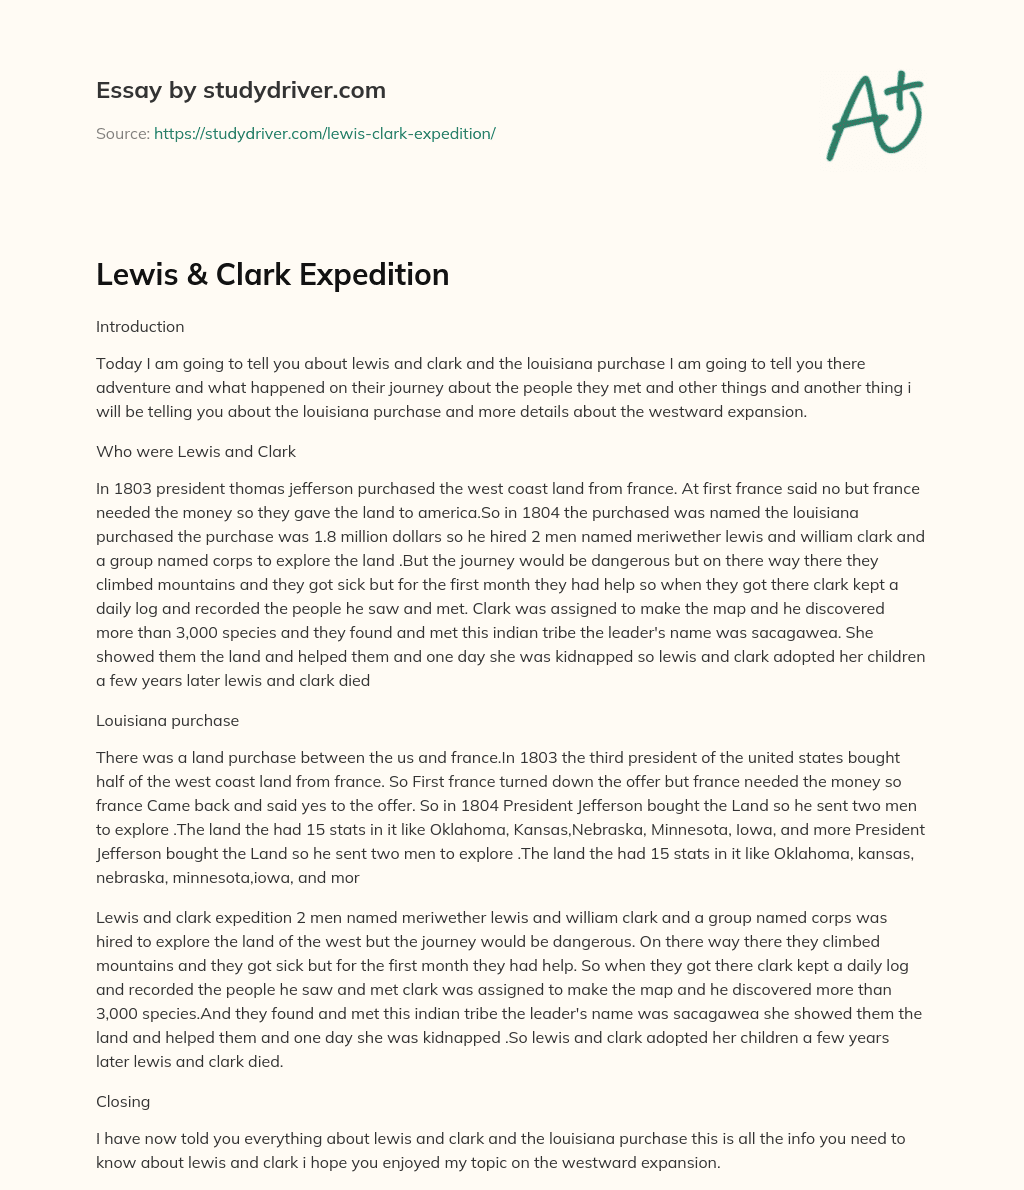 Lewis & Clark Expedition essay